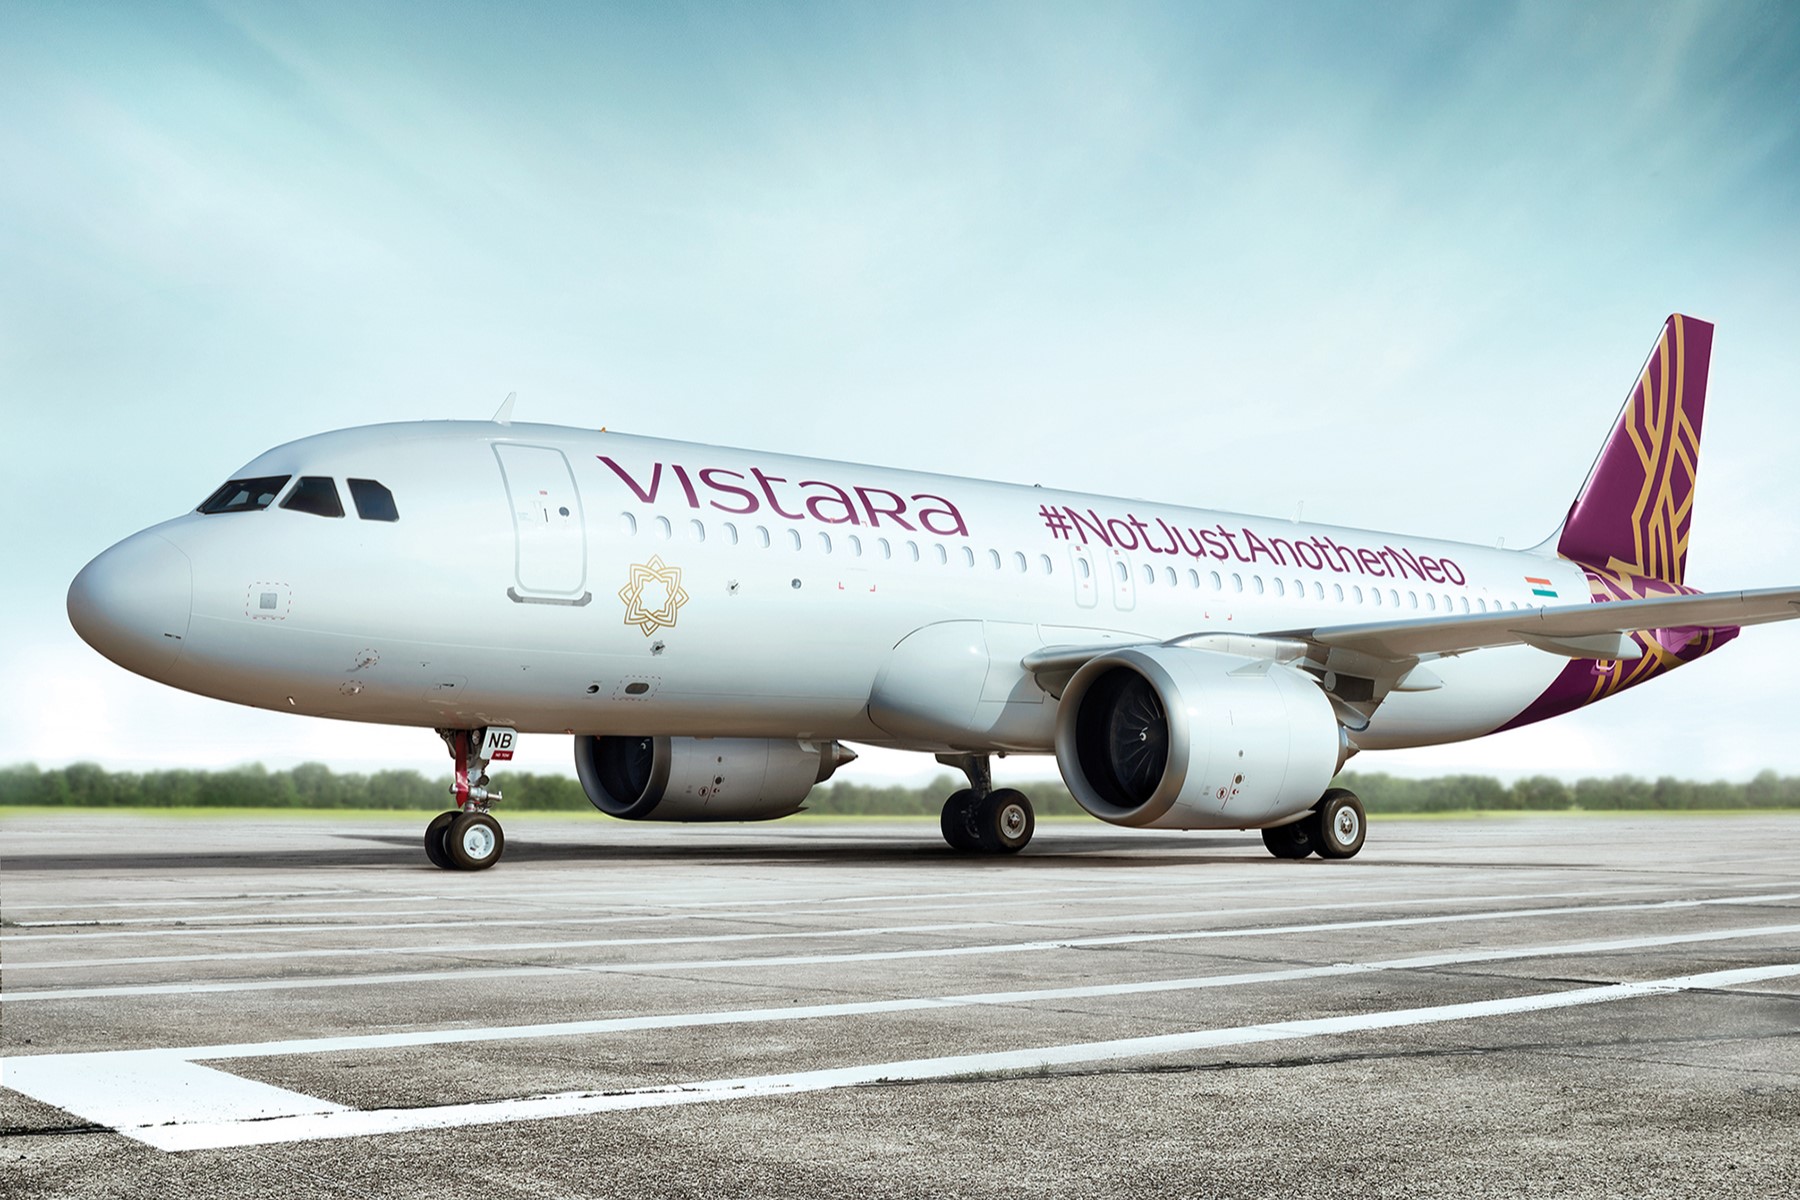 Vistara to operate Mumbai-Indore flights for Pravasi Bhartiya Diwas for 15 days